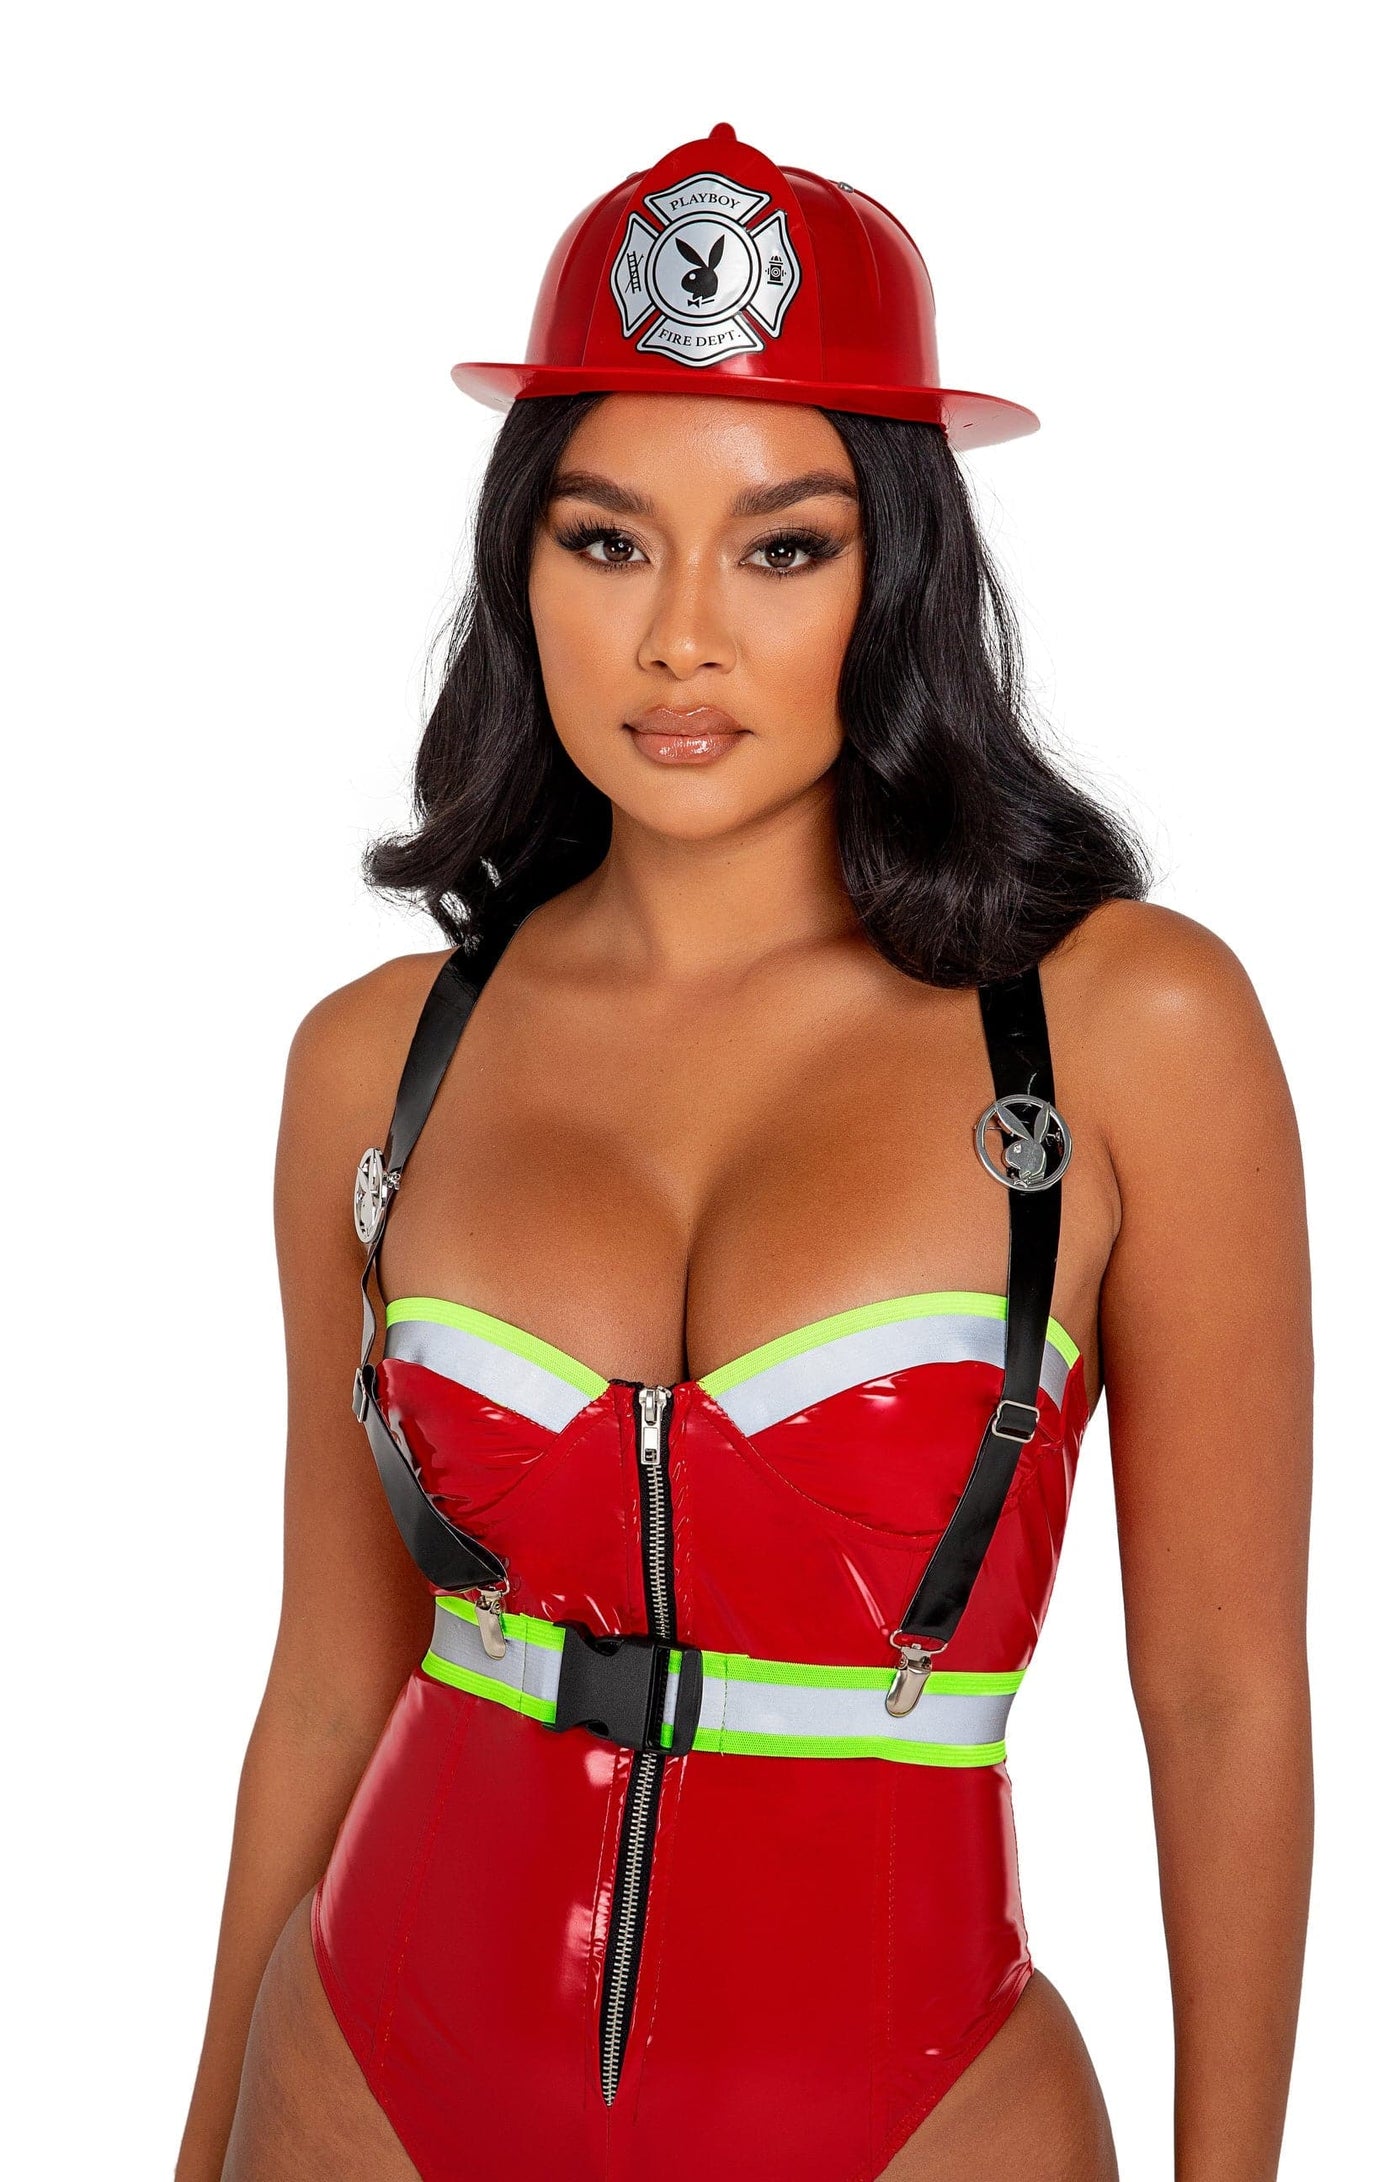 3pc. Official Playboy Bunny Smokin’ Hot Firegirl Firefighter Women's Costume - For Love of Lingerie